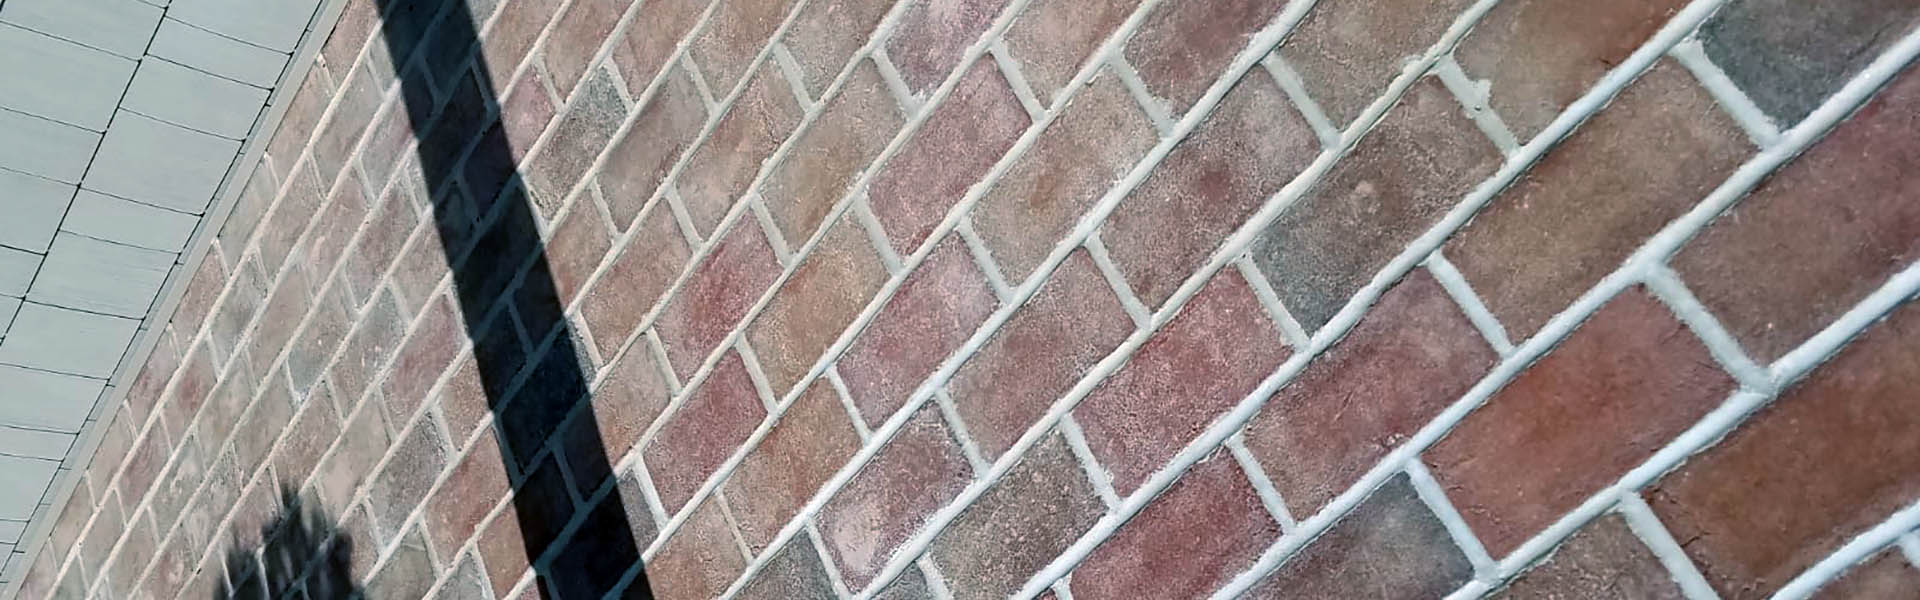 brick walkway with mortar